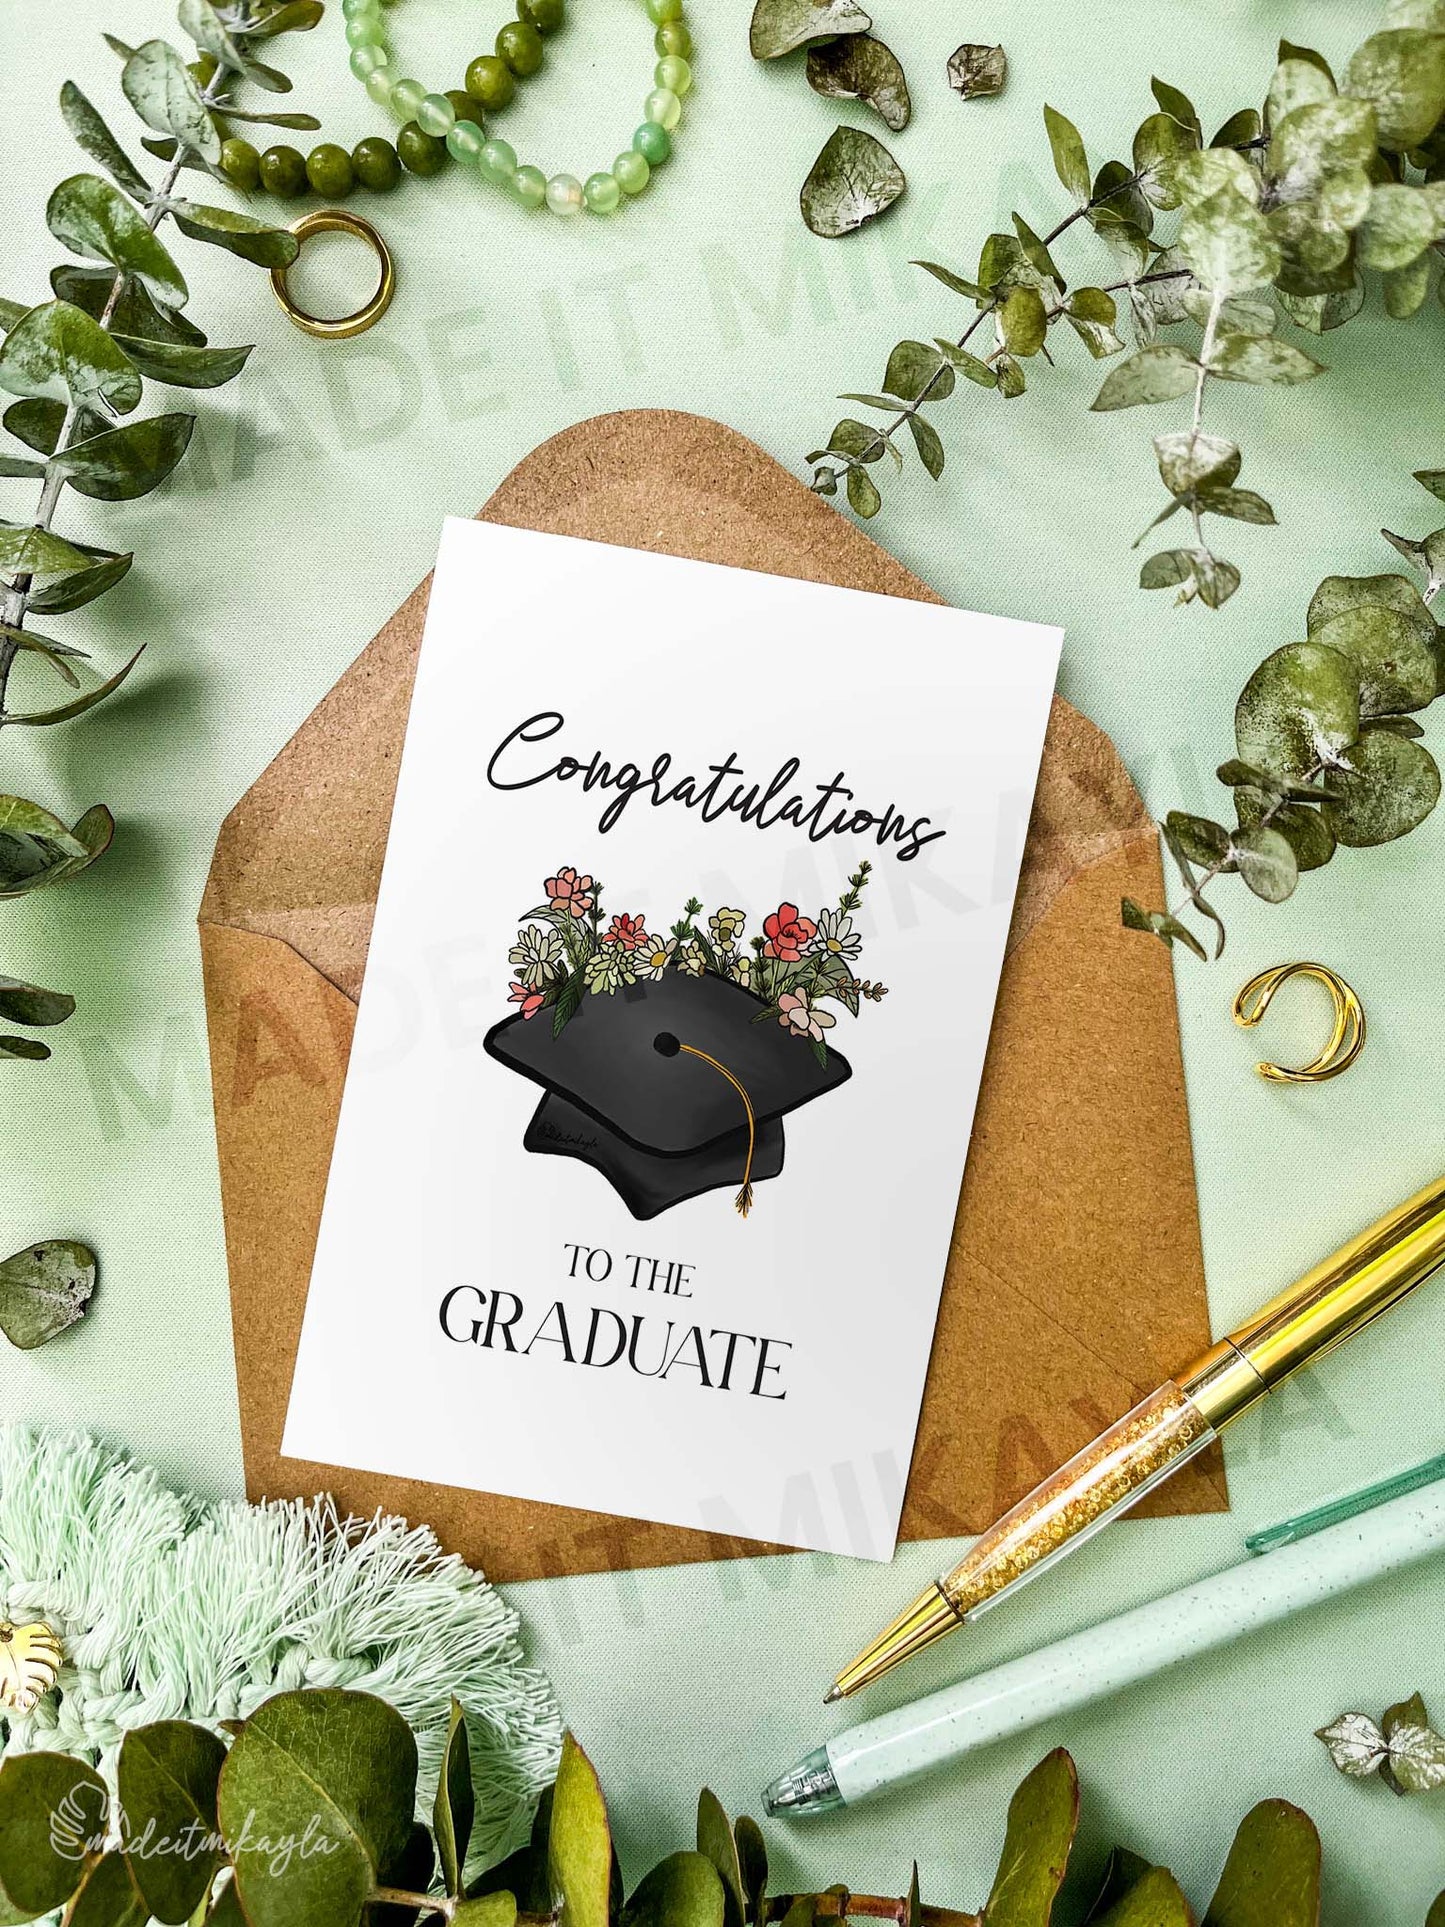 Congratulations To The Graduate Greeting Card | MadeItMikayla